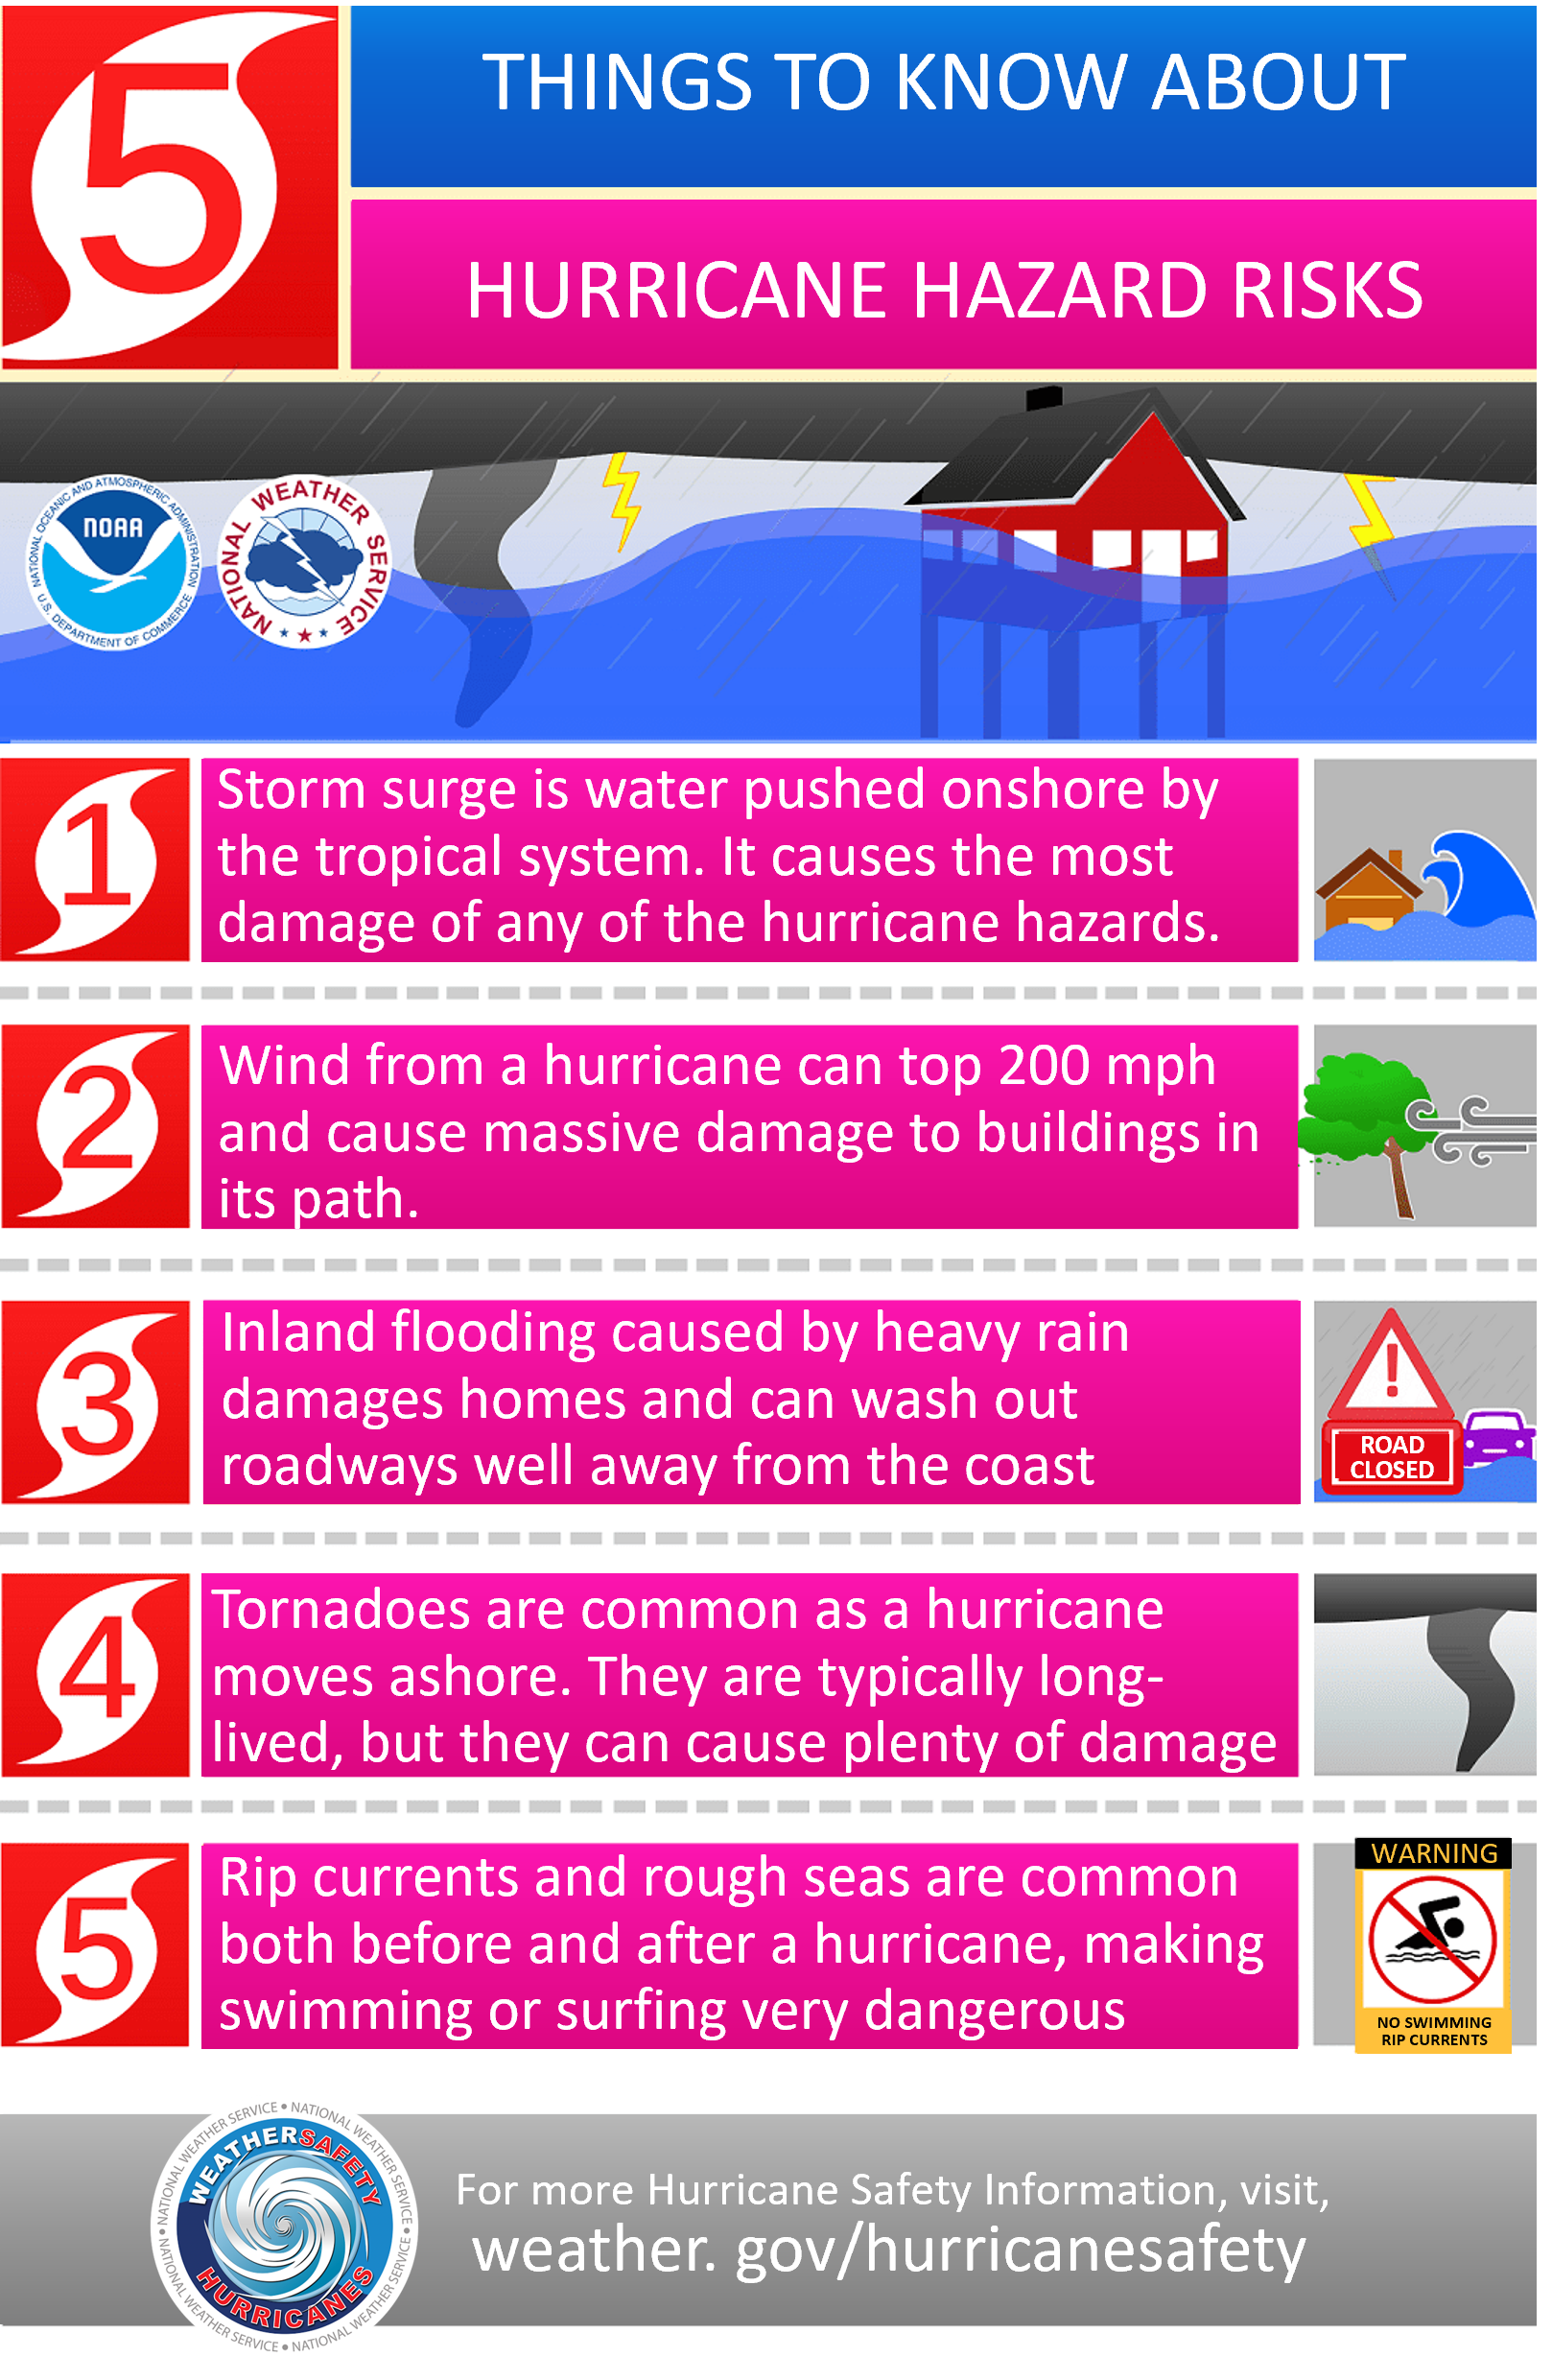 Figure 4.4.5.2 Hazard risks associated with hurricanes